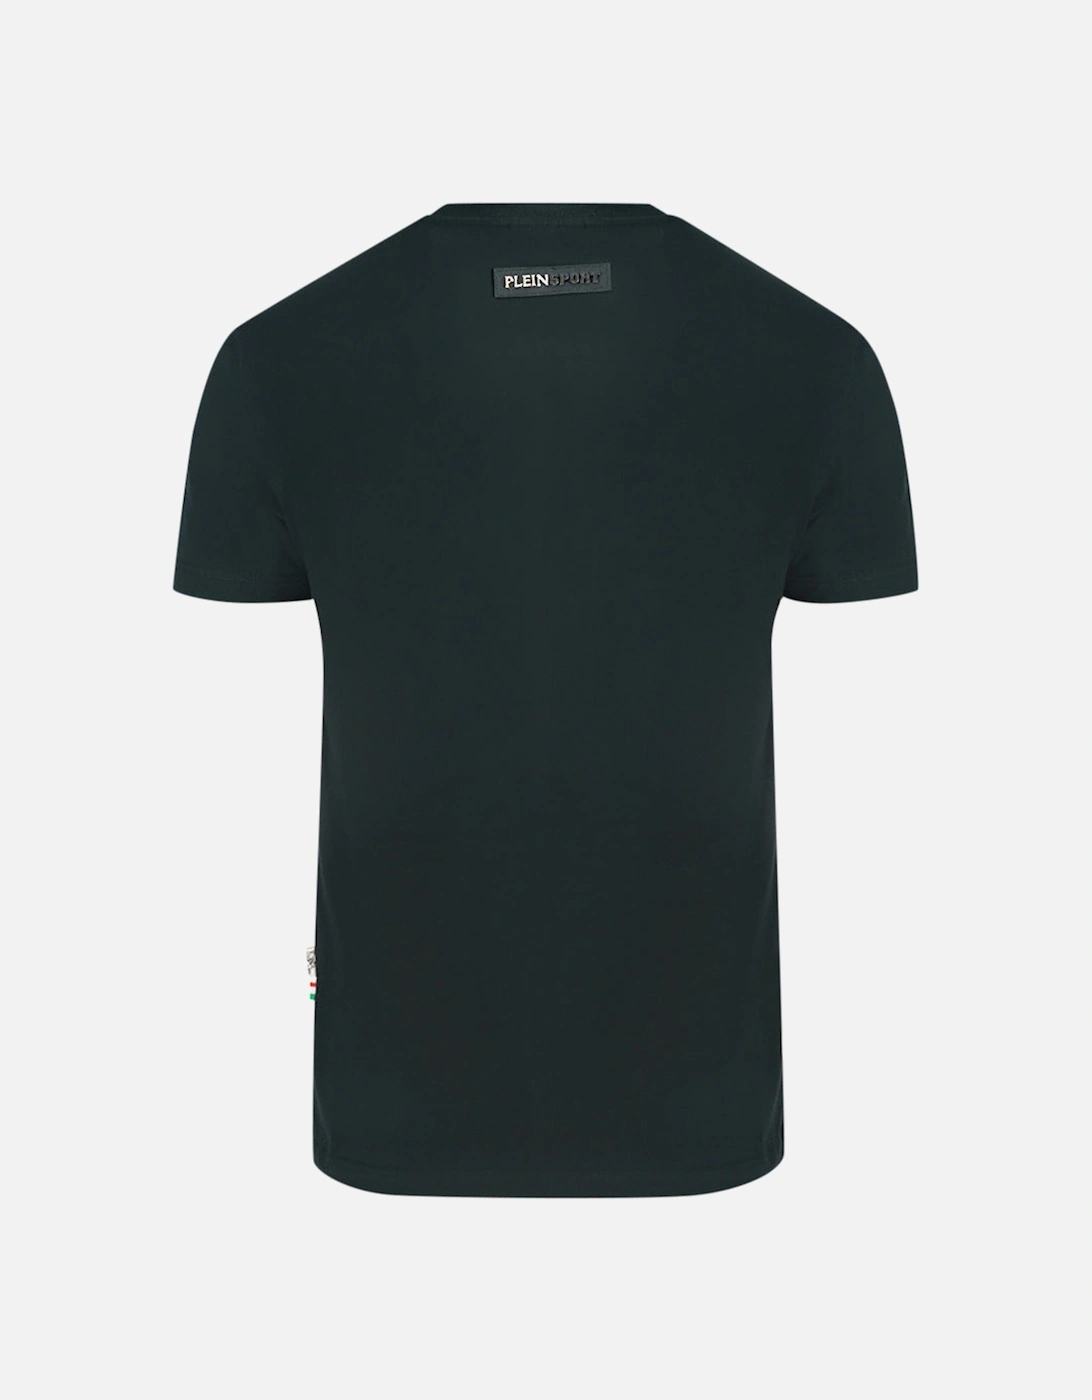 Plein Sport Signature Black T-Shirt